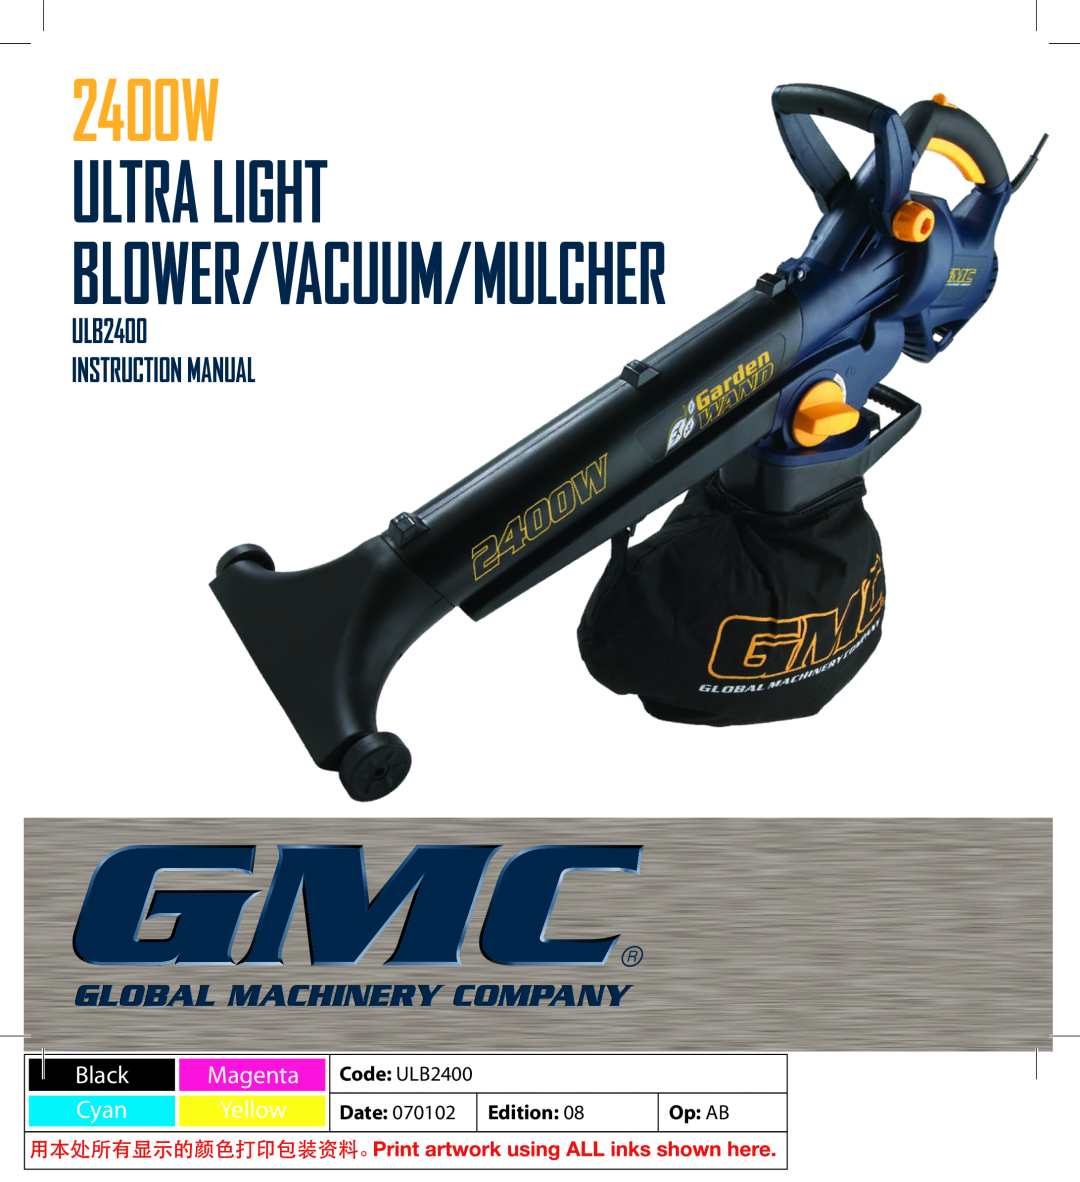 Global Machinery Company instruction manual 2400W ULTRA LIGHT BLOWER/VACUUM/MULCHER, ULB2400 INSTRUCTION MANUAL, Date 